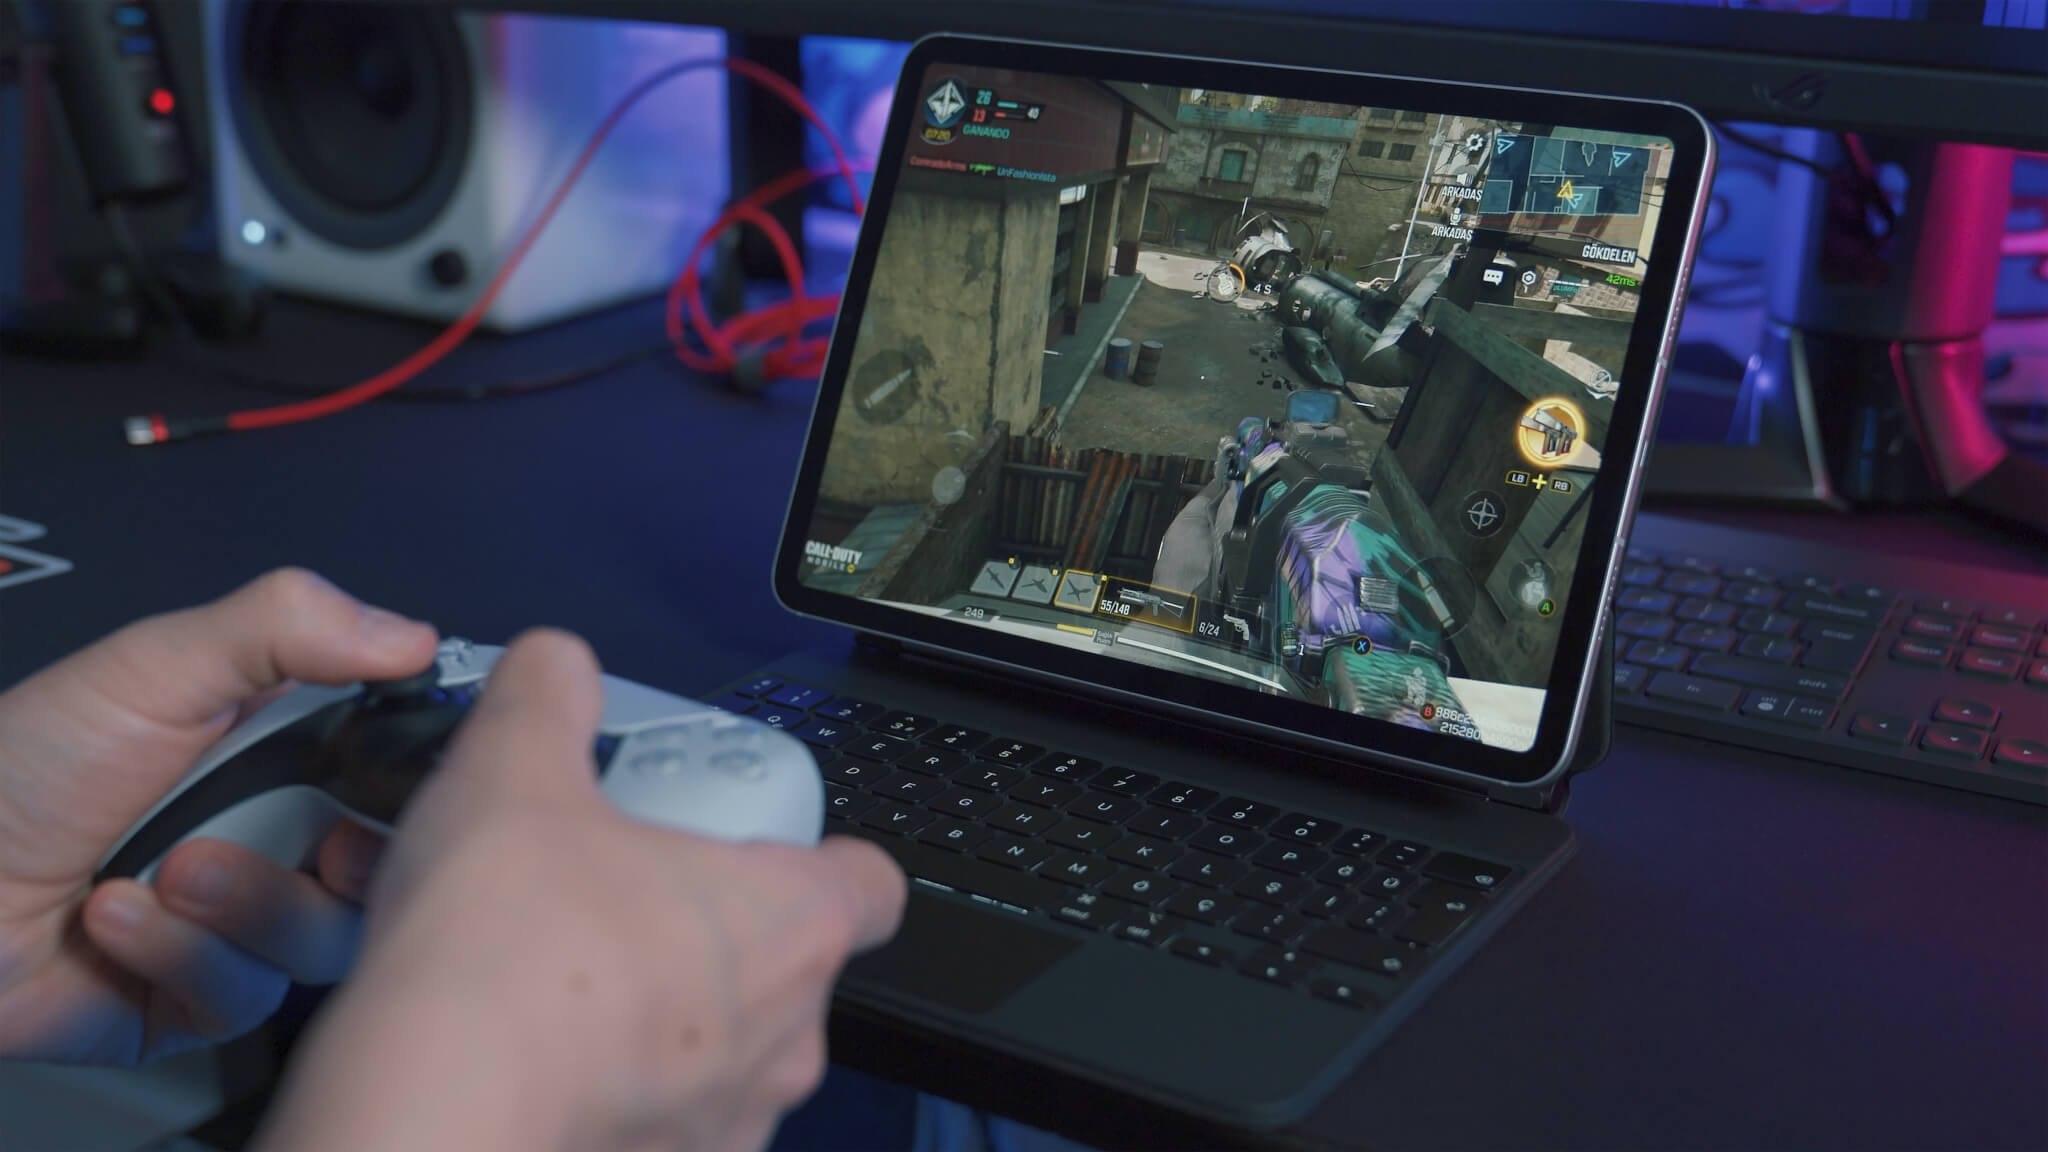 Video gamer gaming on a laptop